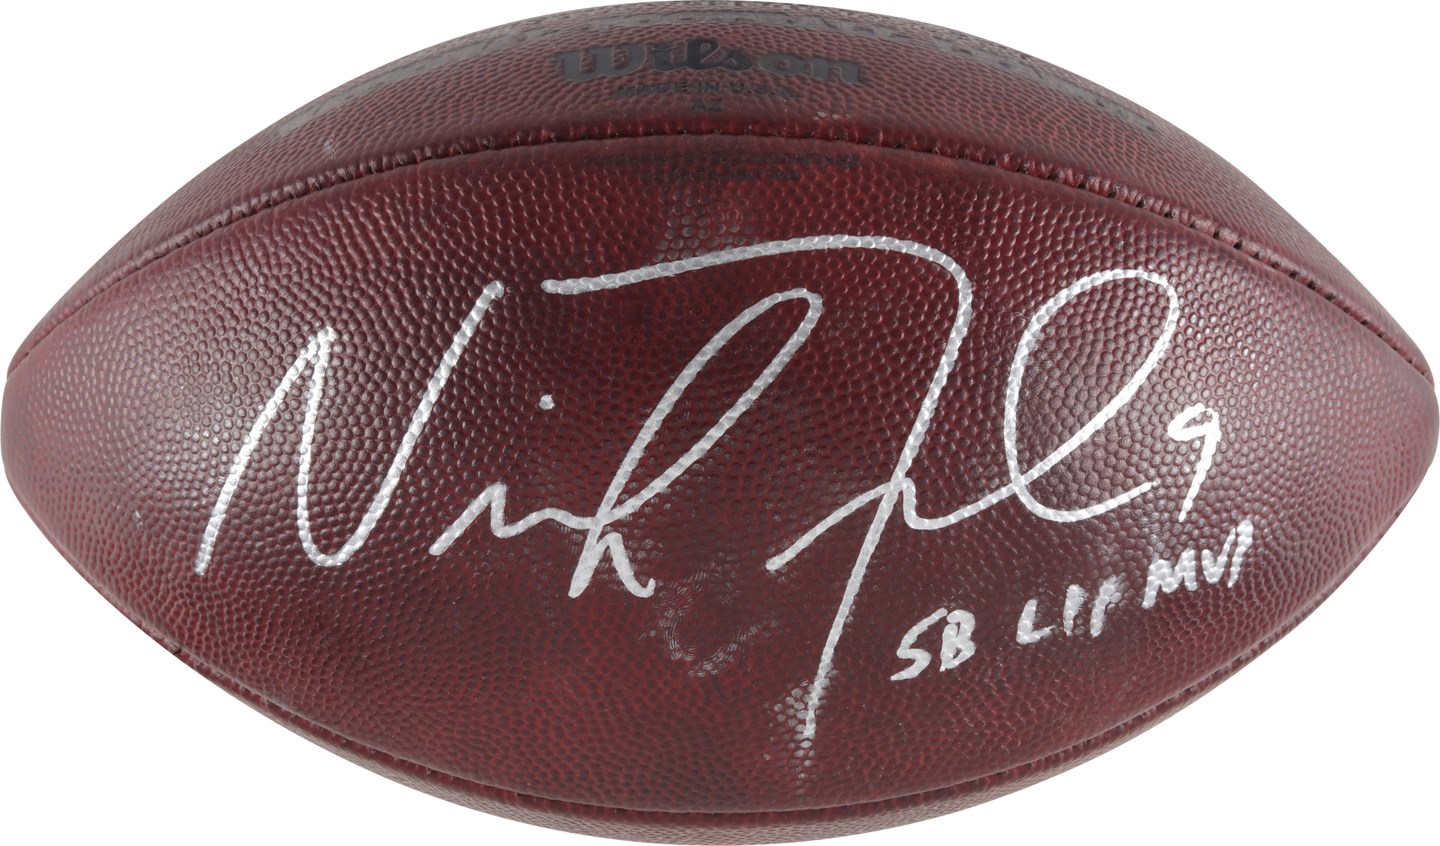 - 2018 Super Bowl LI Game Used Football Signed by Nick Foles with "SB LII MVP" Inscription (Fanatics)